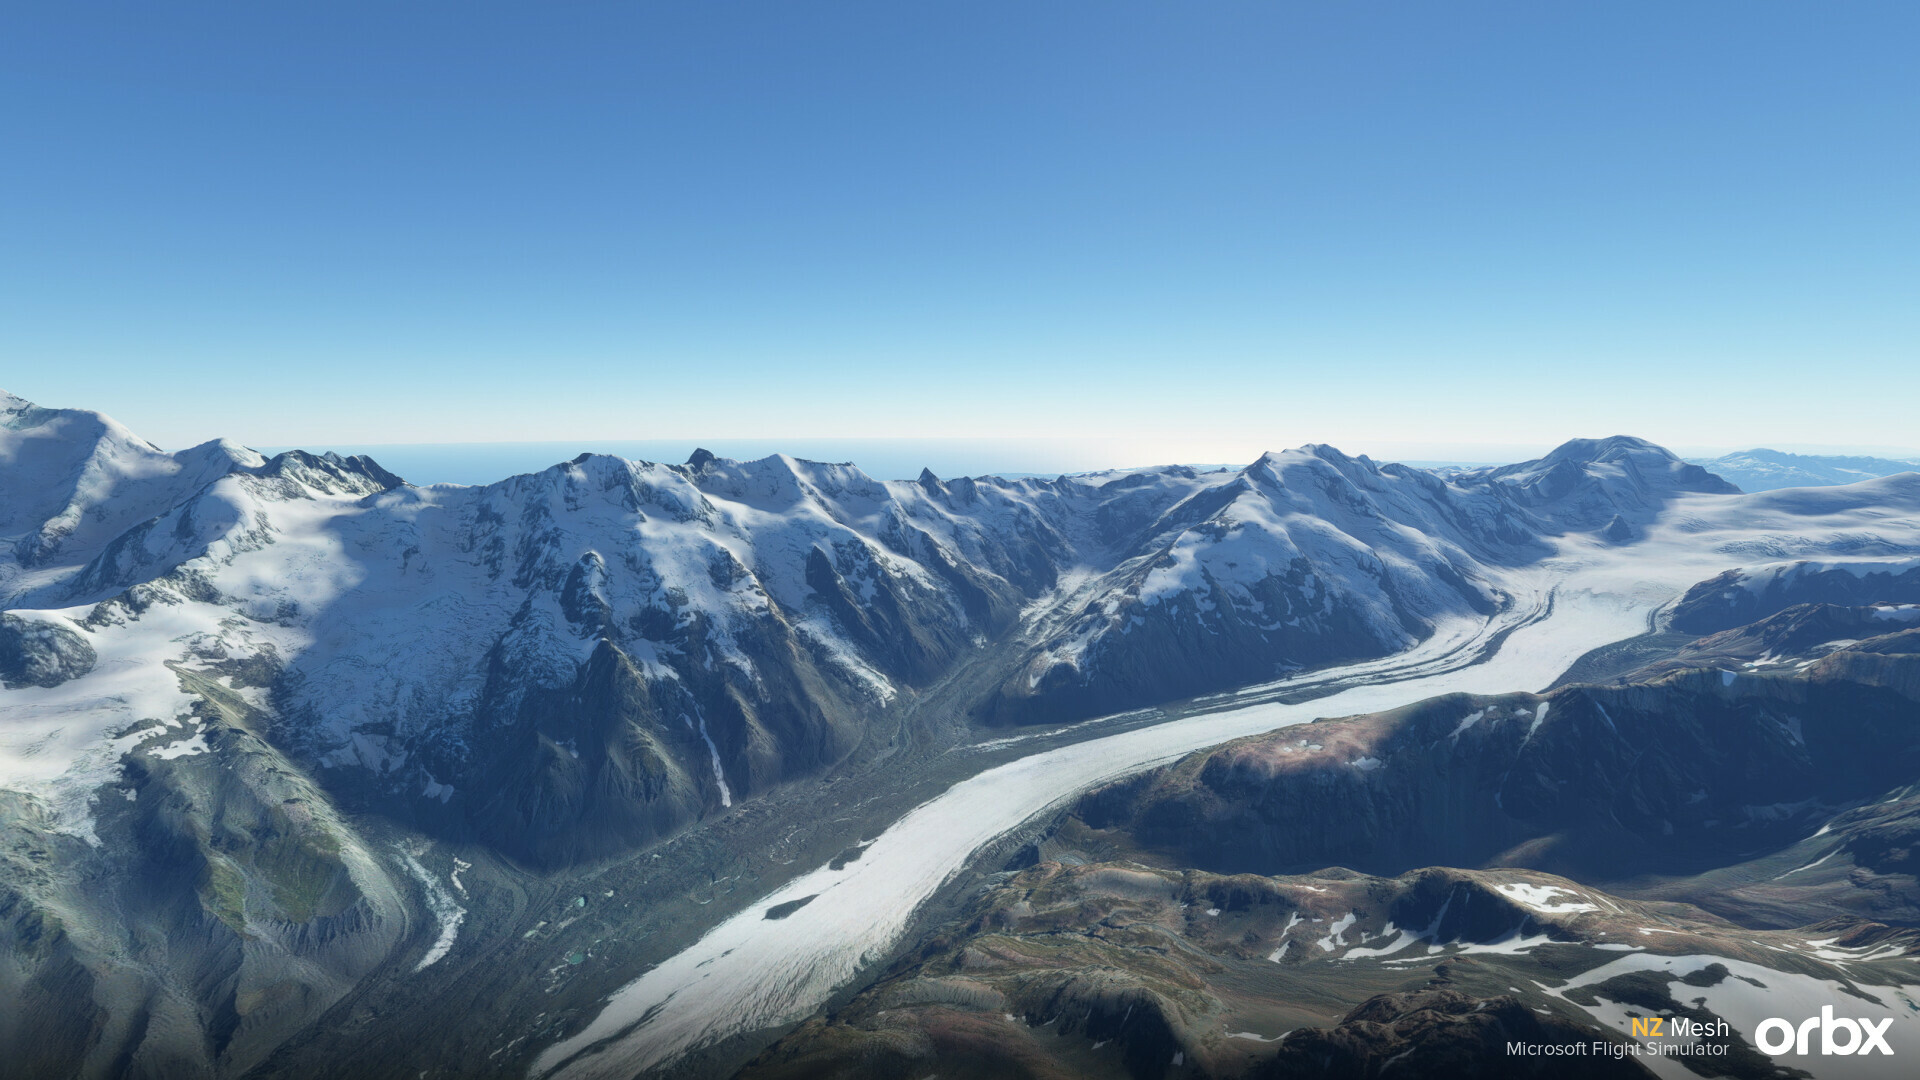 Orbx Releases NZ Mesh for MSFS - Microsoft Flight Simulator, Orbx